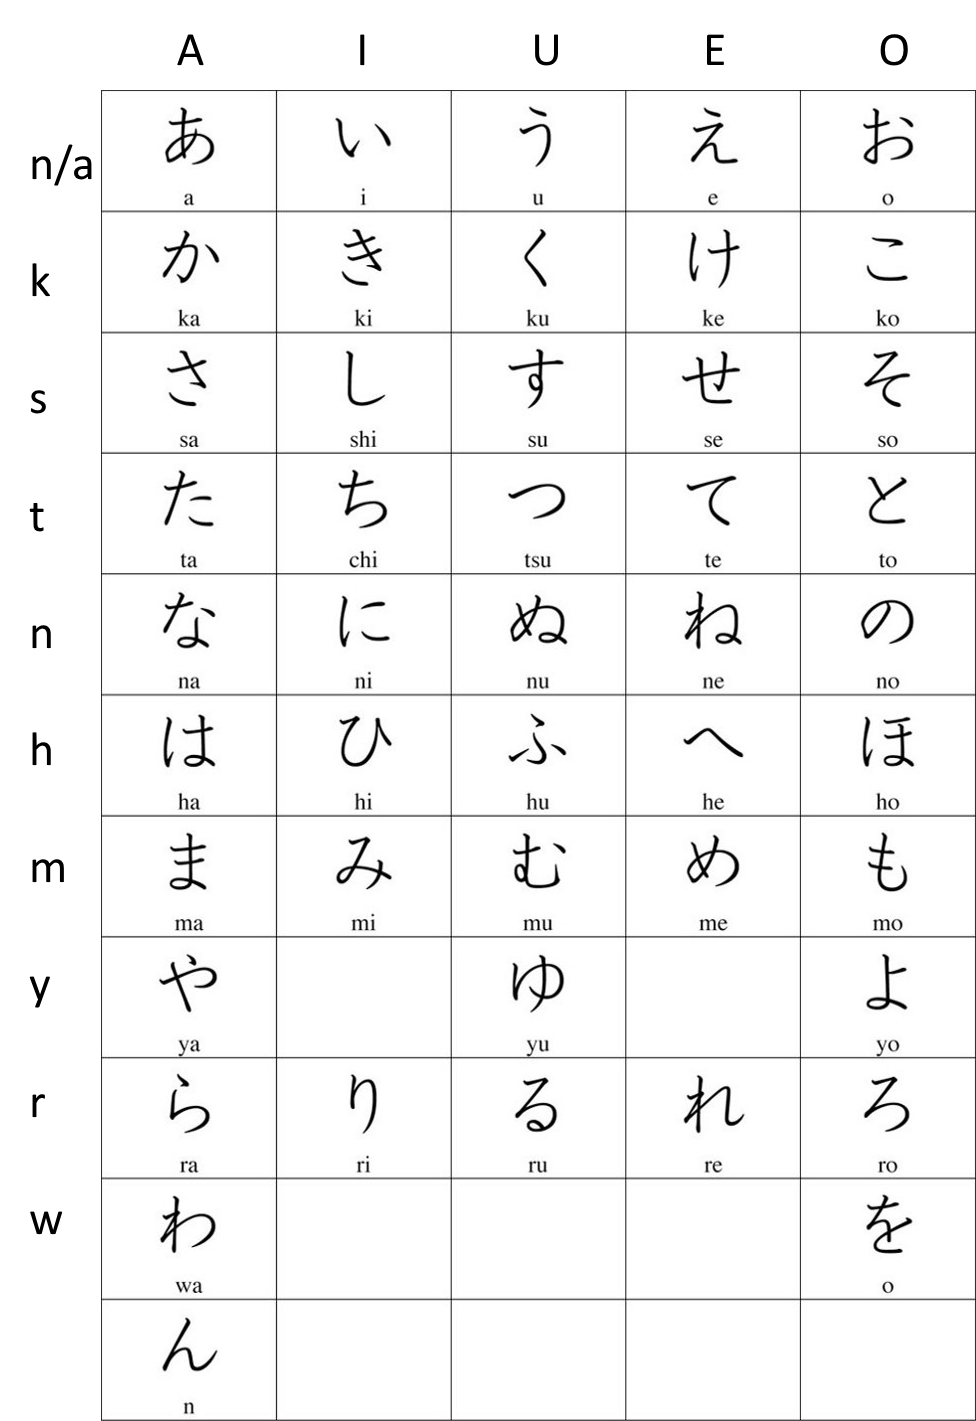 Hiragana Gotcha S If You Want To Learn To Read Japanese By Joseph Allen Cultureninja Medium